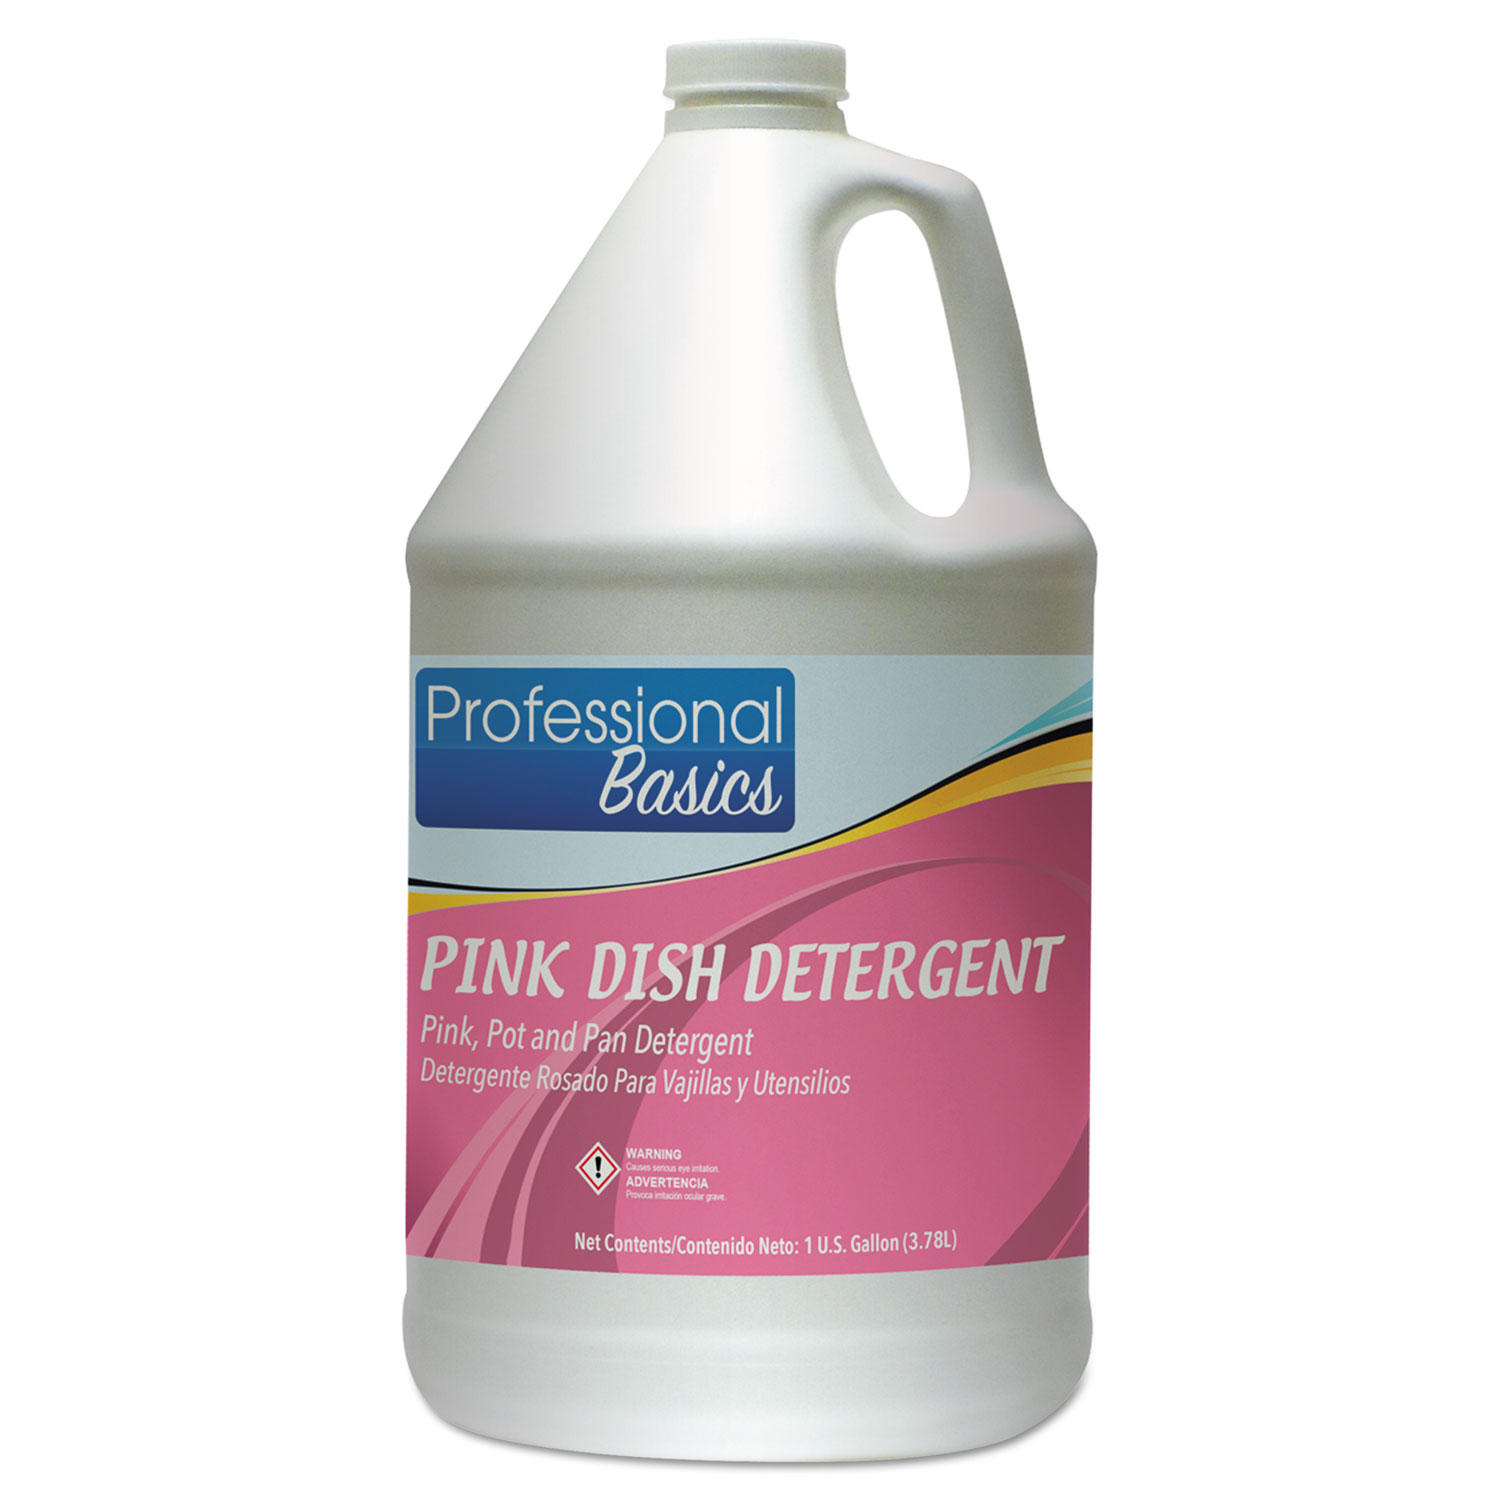 Professional Basics Pink Dishwashing Detergent, Bouquet, 1 gal Bottle